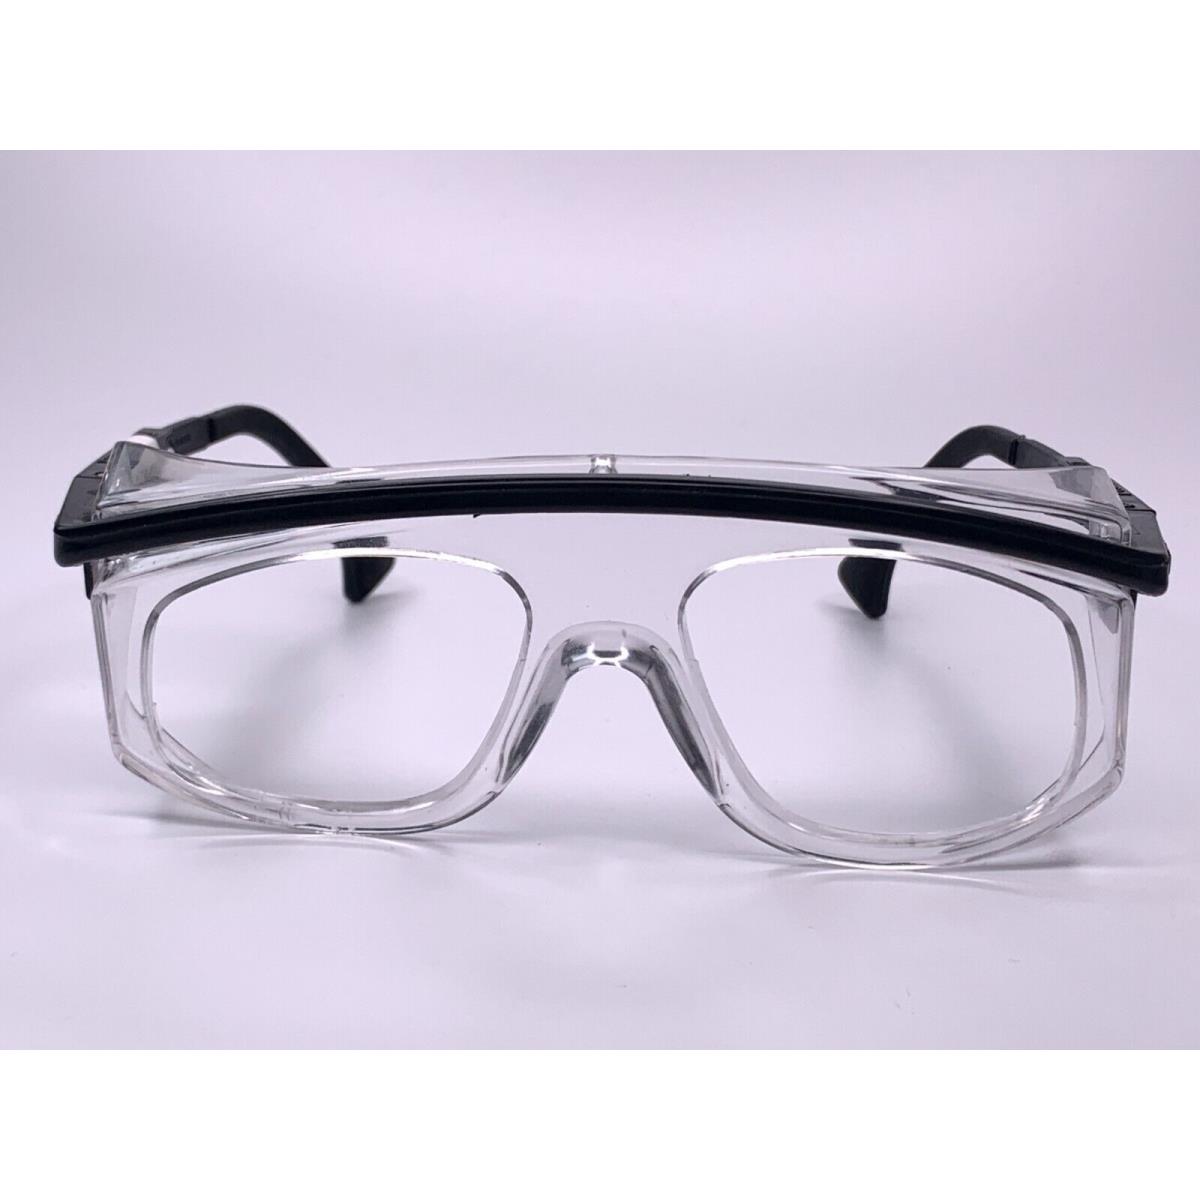 Uvex Z87 Astro 3003-L1 Black Clear Safety Goggles Glasses Frames 2401 54-20-130